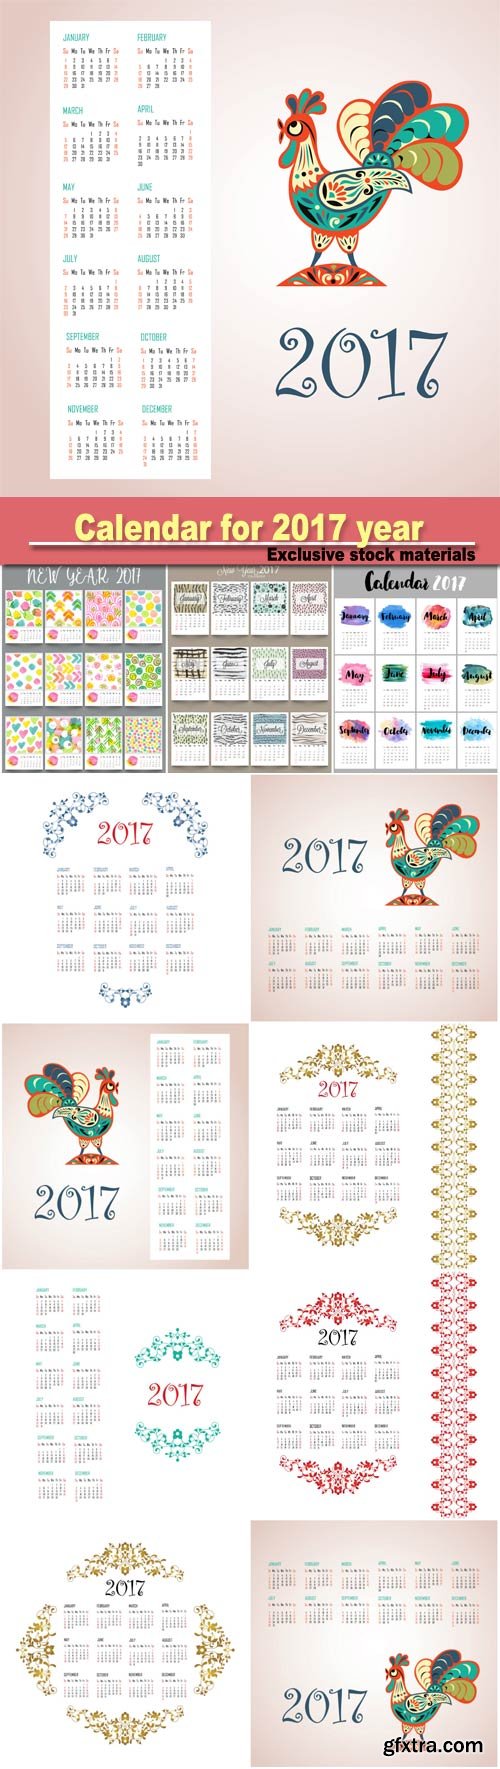 Calendar design for New Year 2017